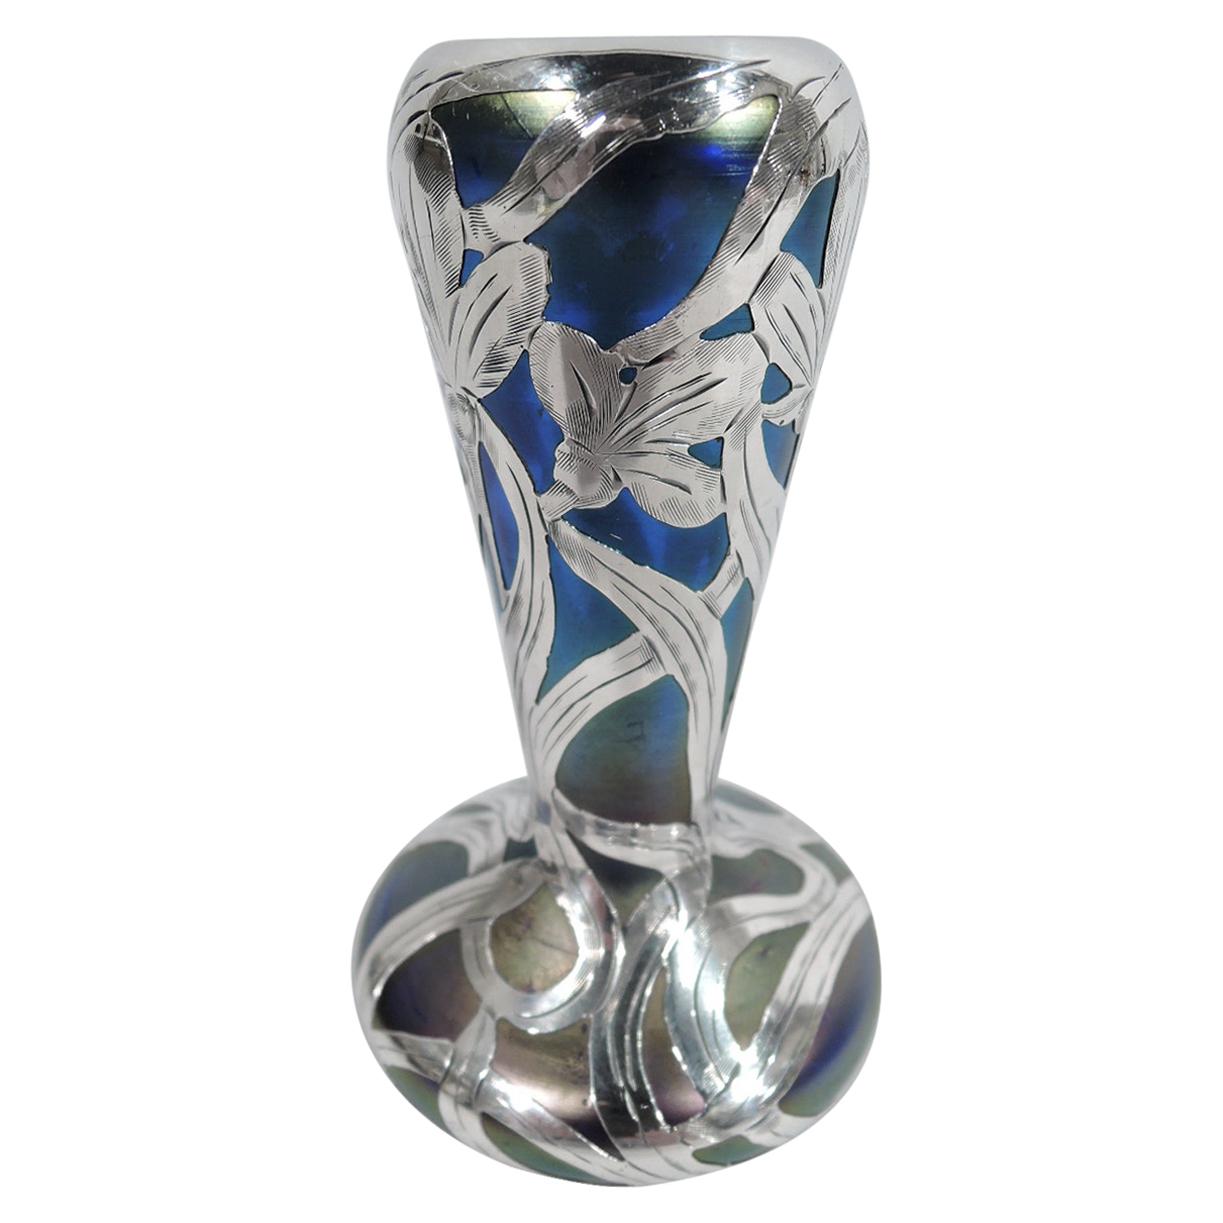 Alvin Austrian Art Nouveau Iridescent Silver Overlay Bud Vase